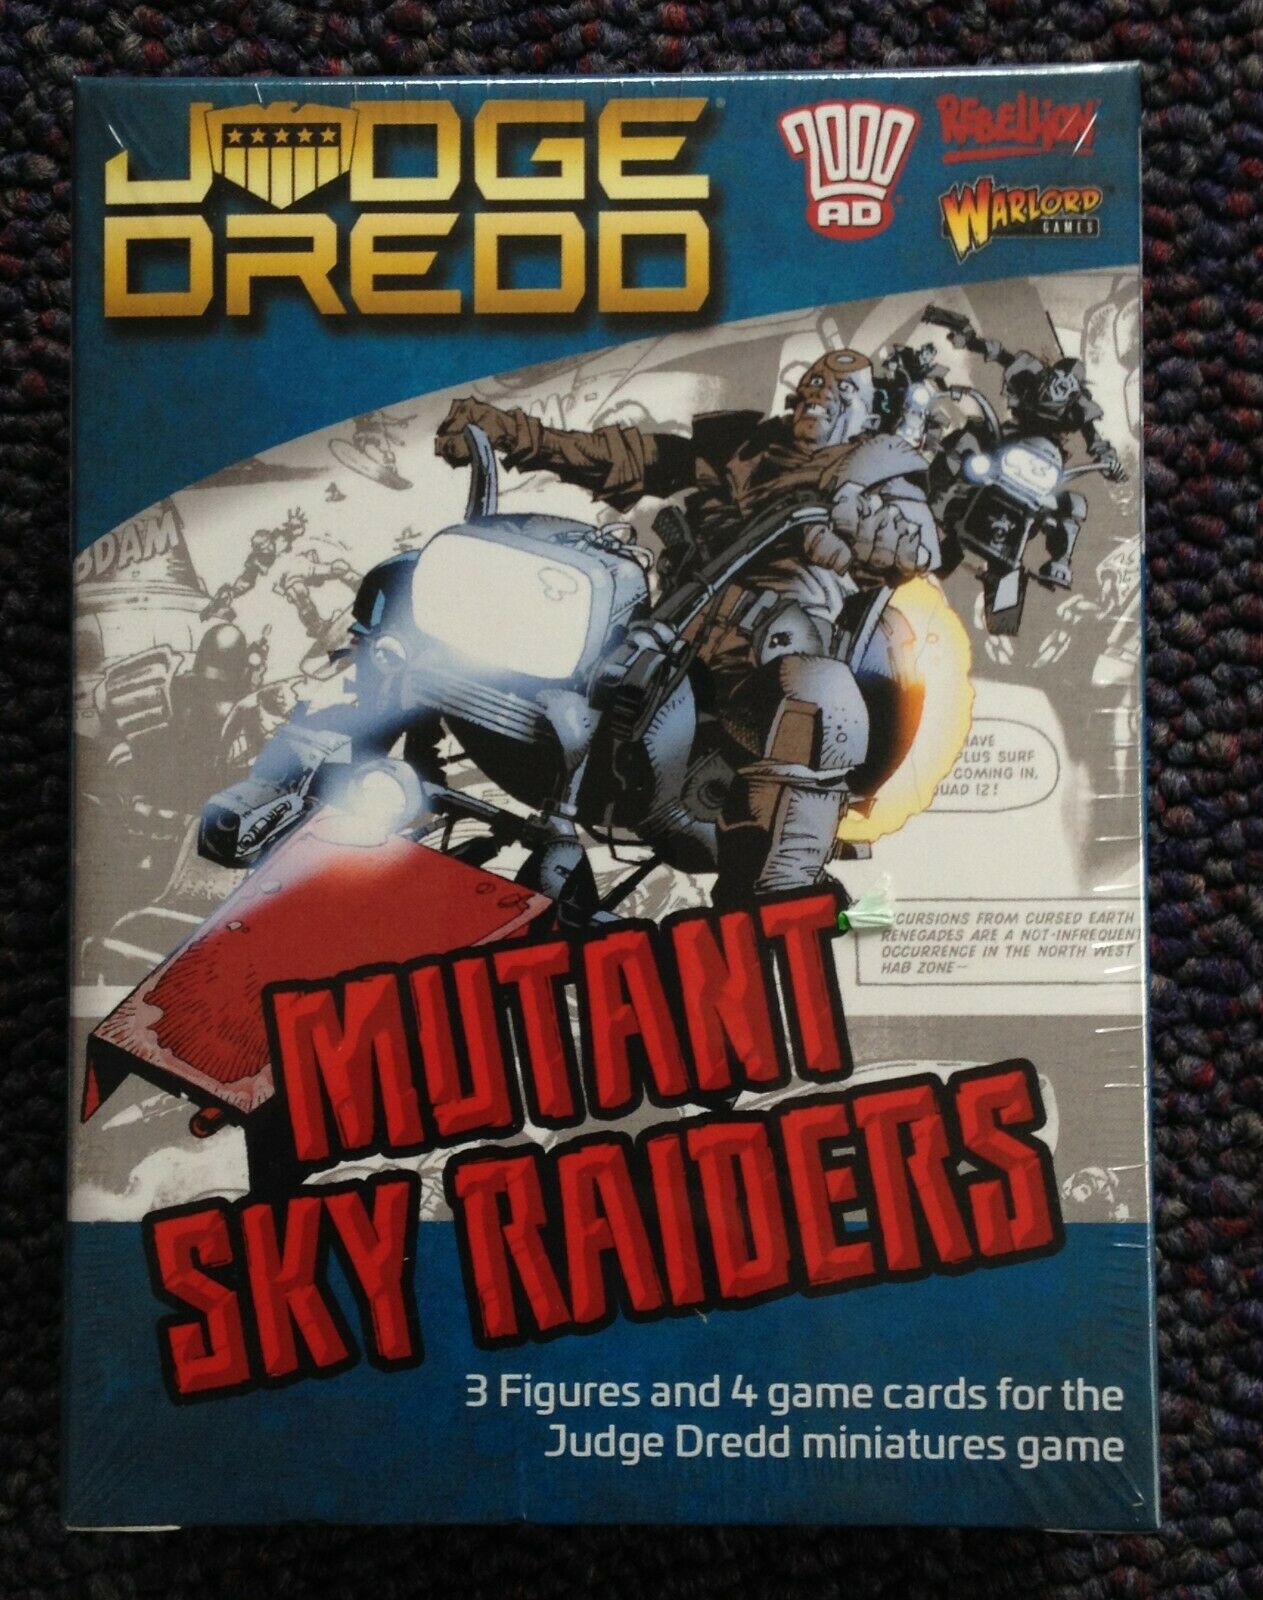 Dredd Mutant Sky Raiders